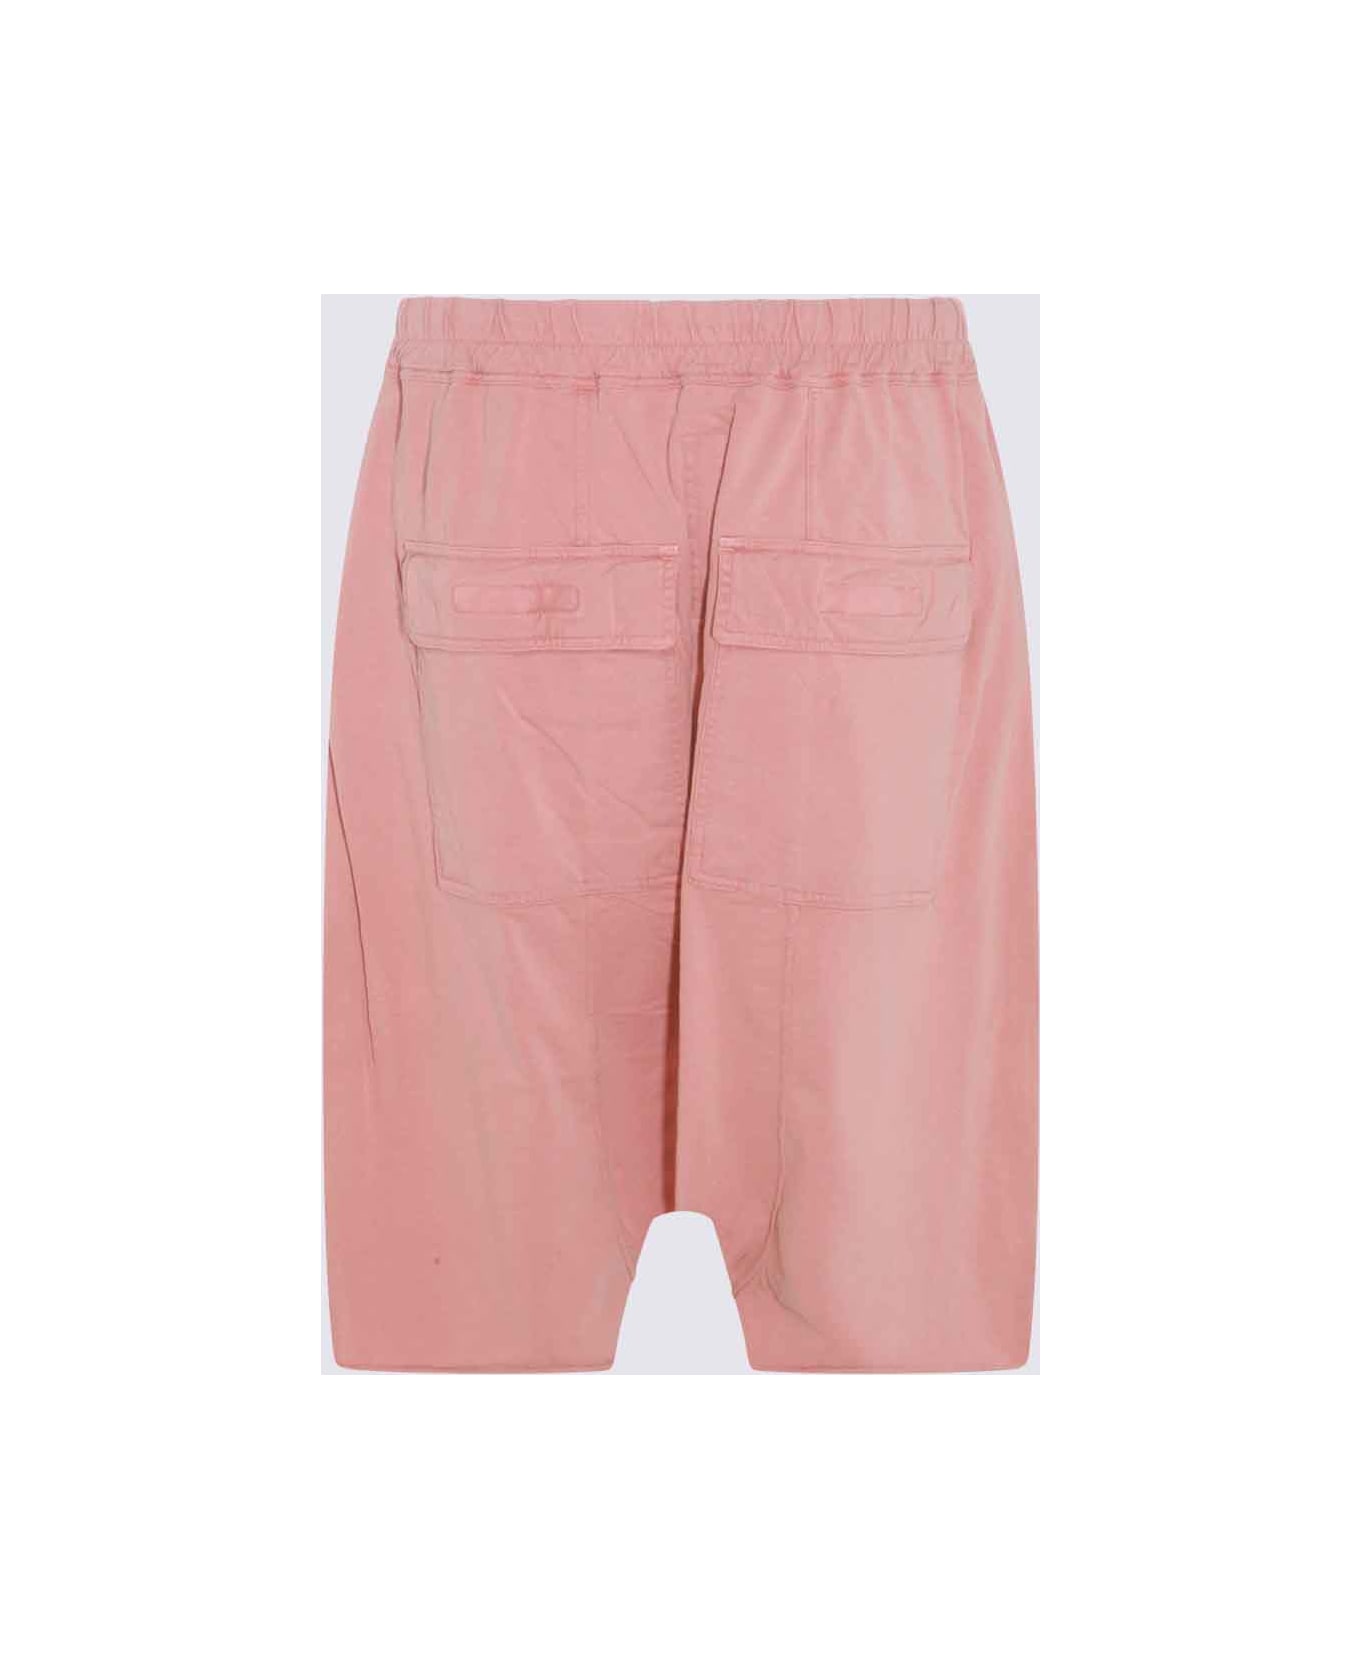 DRKSHDW Pink Cotton Shorts - Pink ショートパンツ